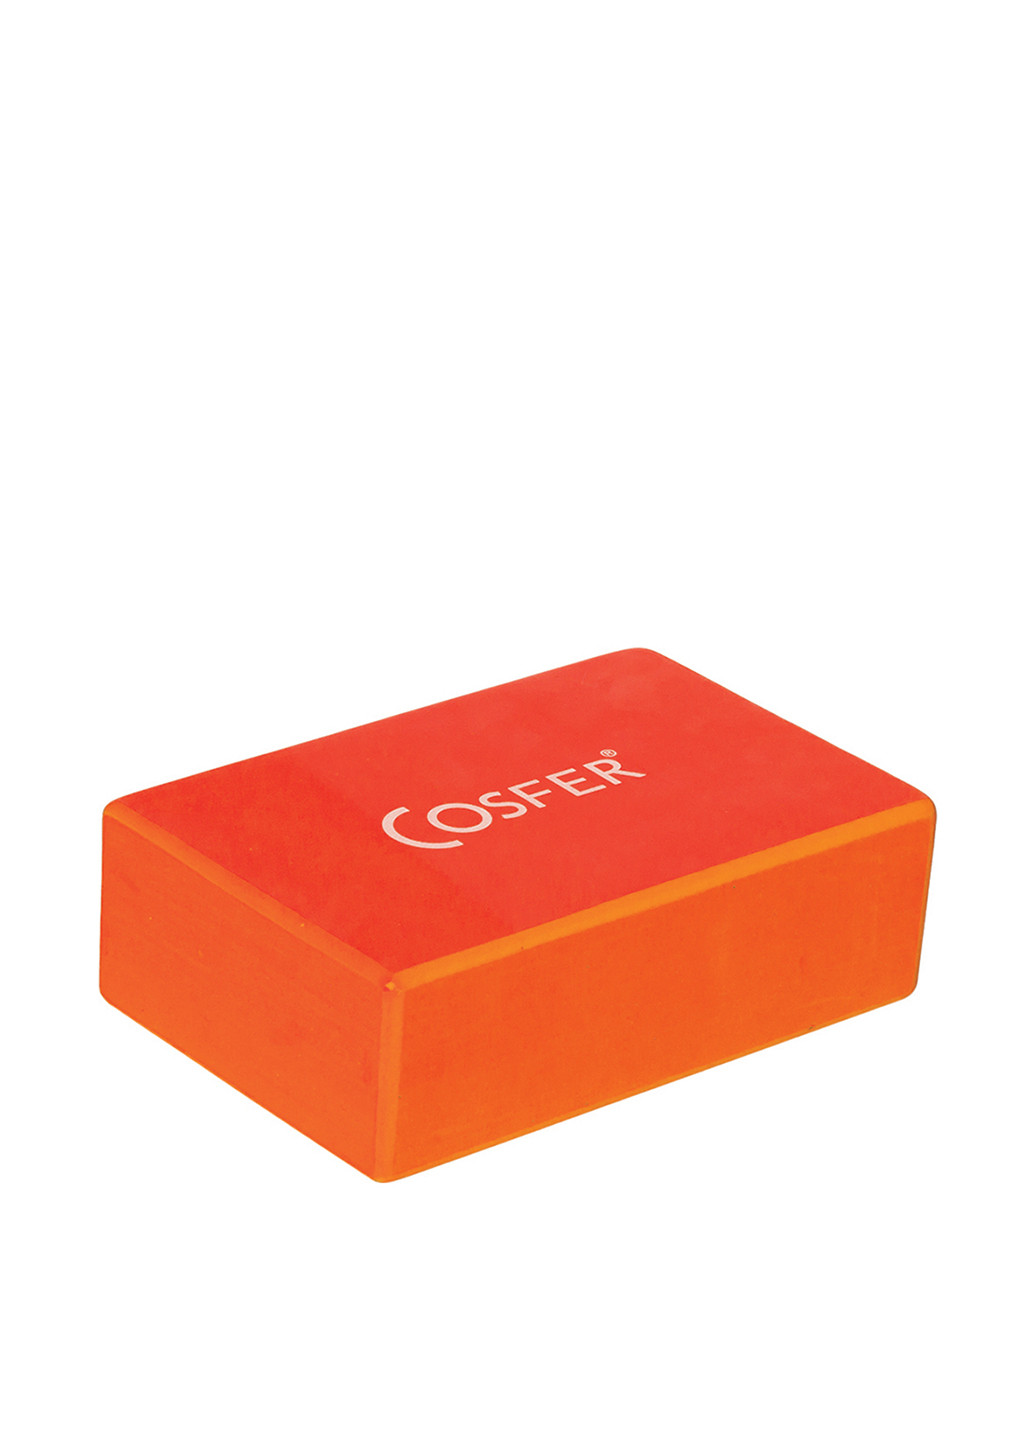 Блок для йоги, 23х15,5х7,5 см Cosfer логотипы оранжевые